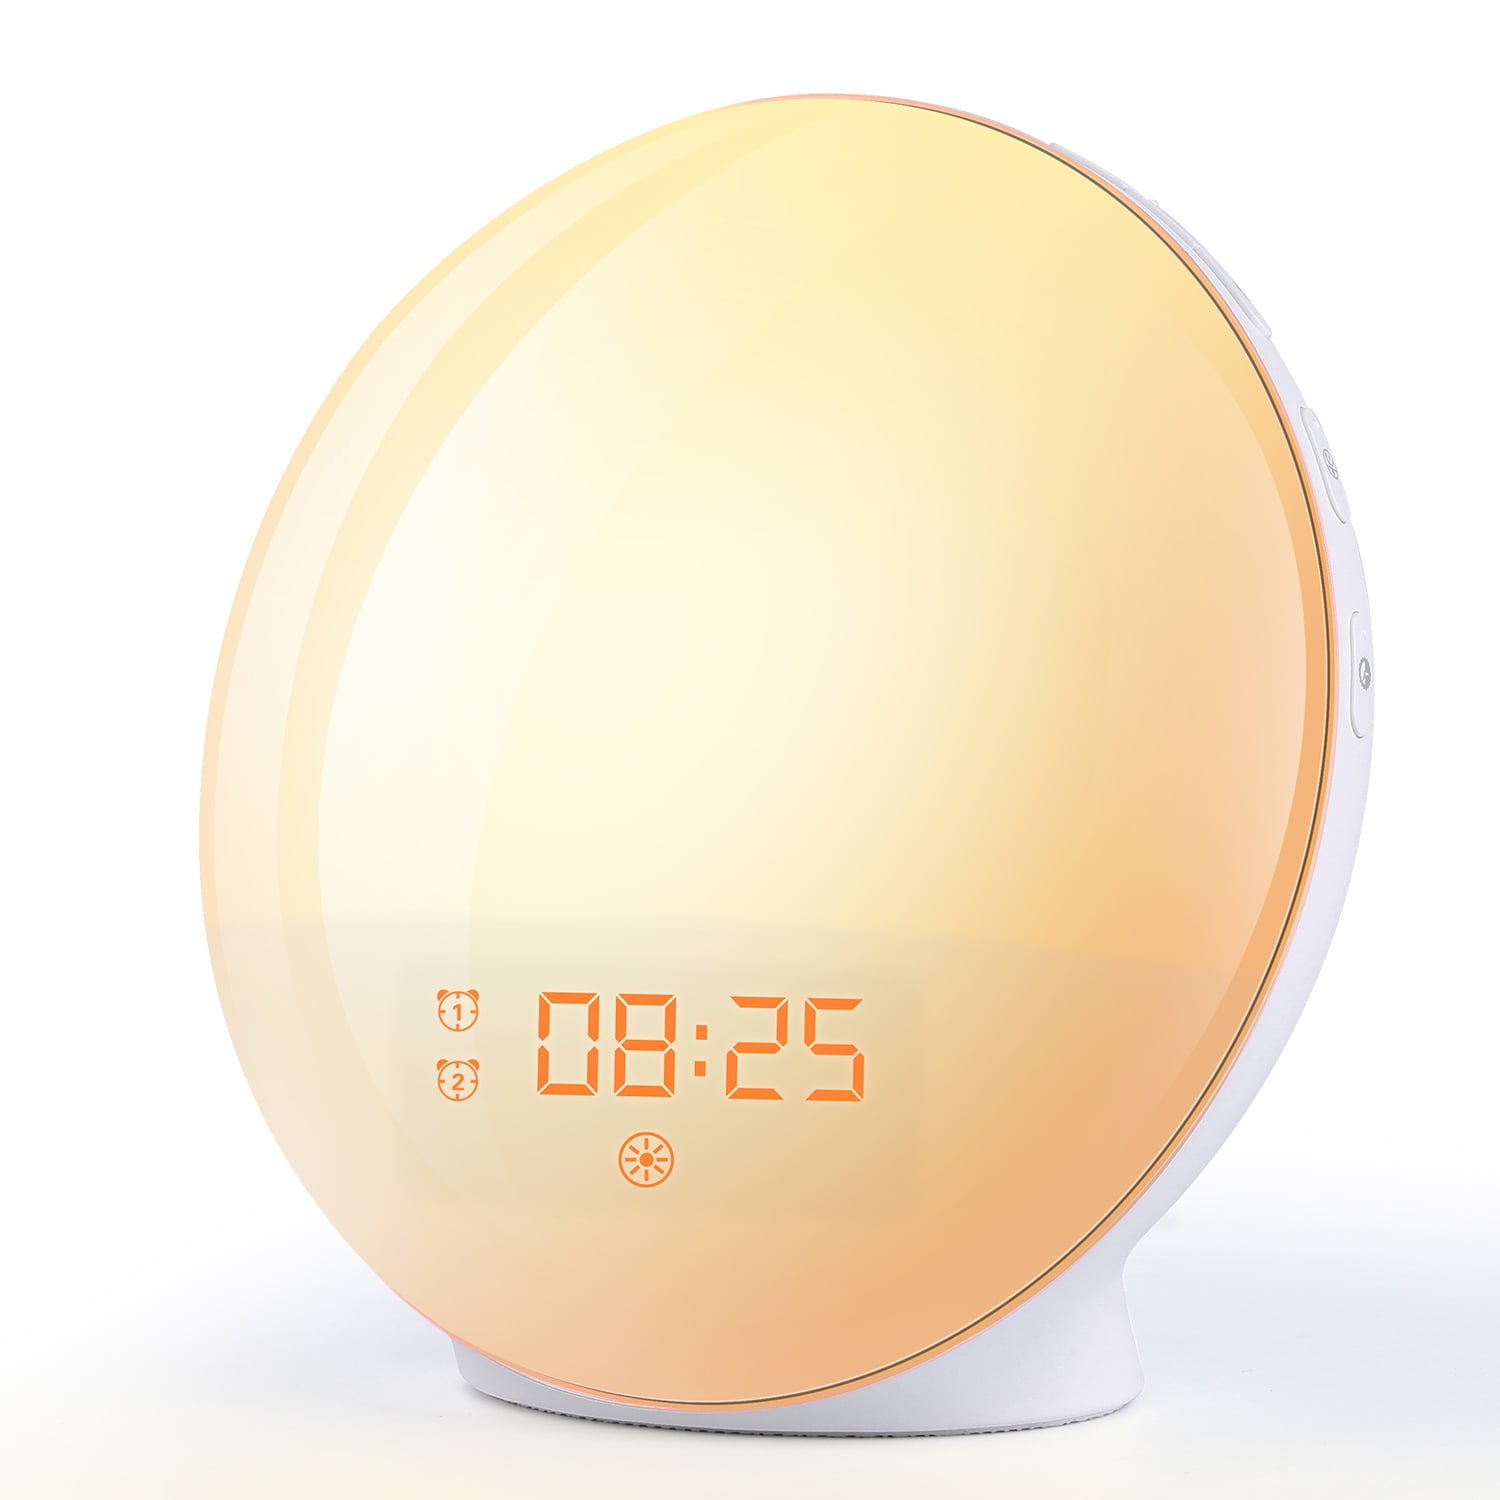 This Sunrise Alarm Clock is my College Morning Routine MVP